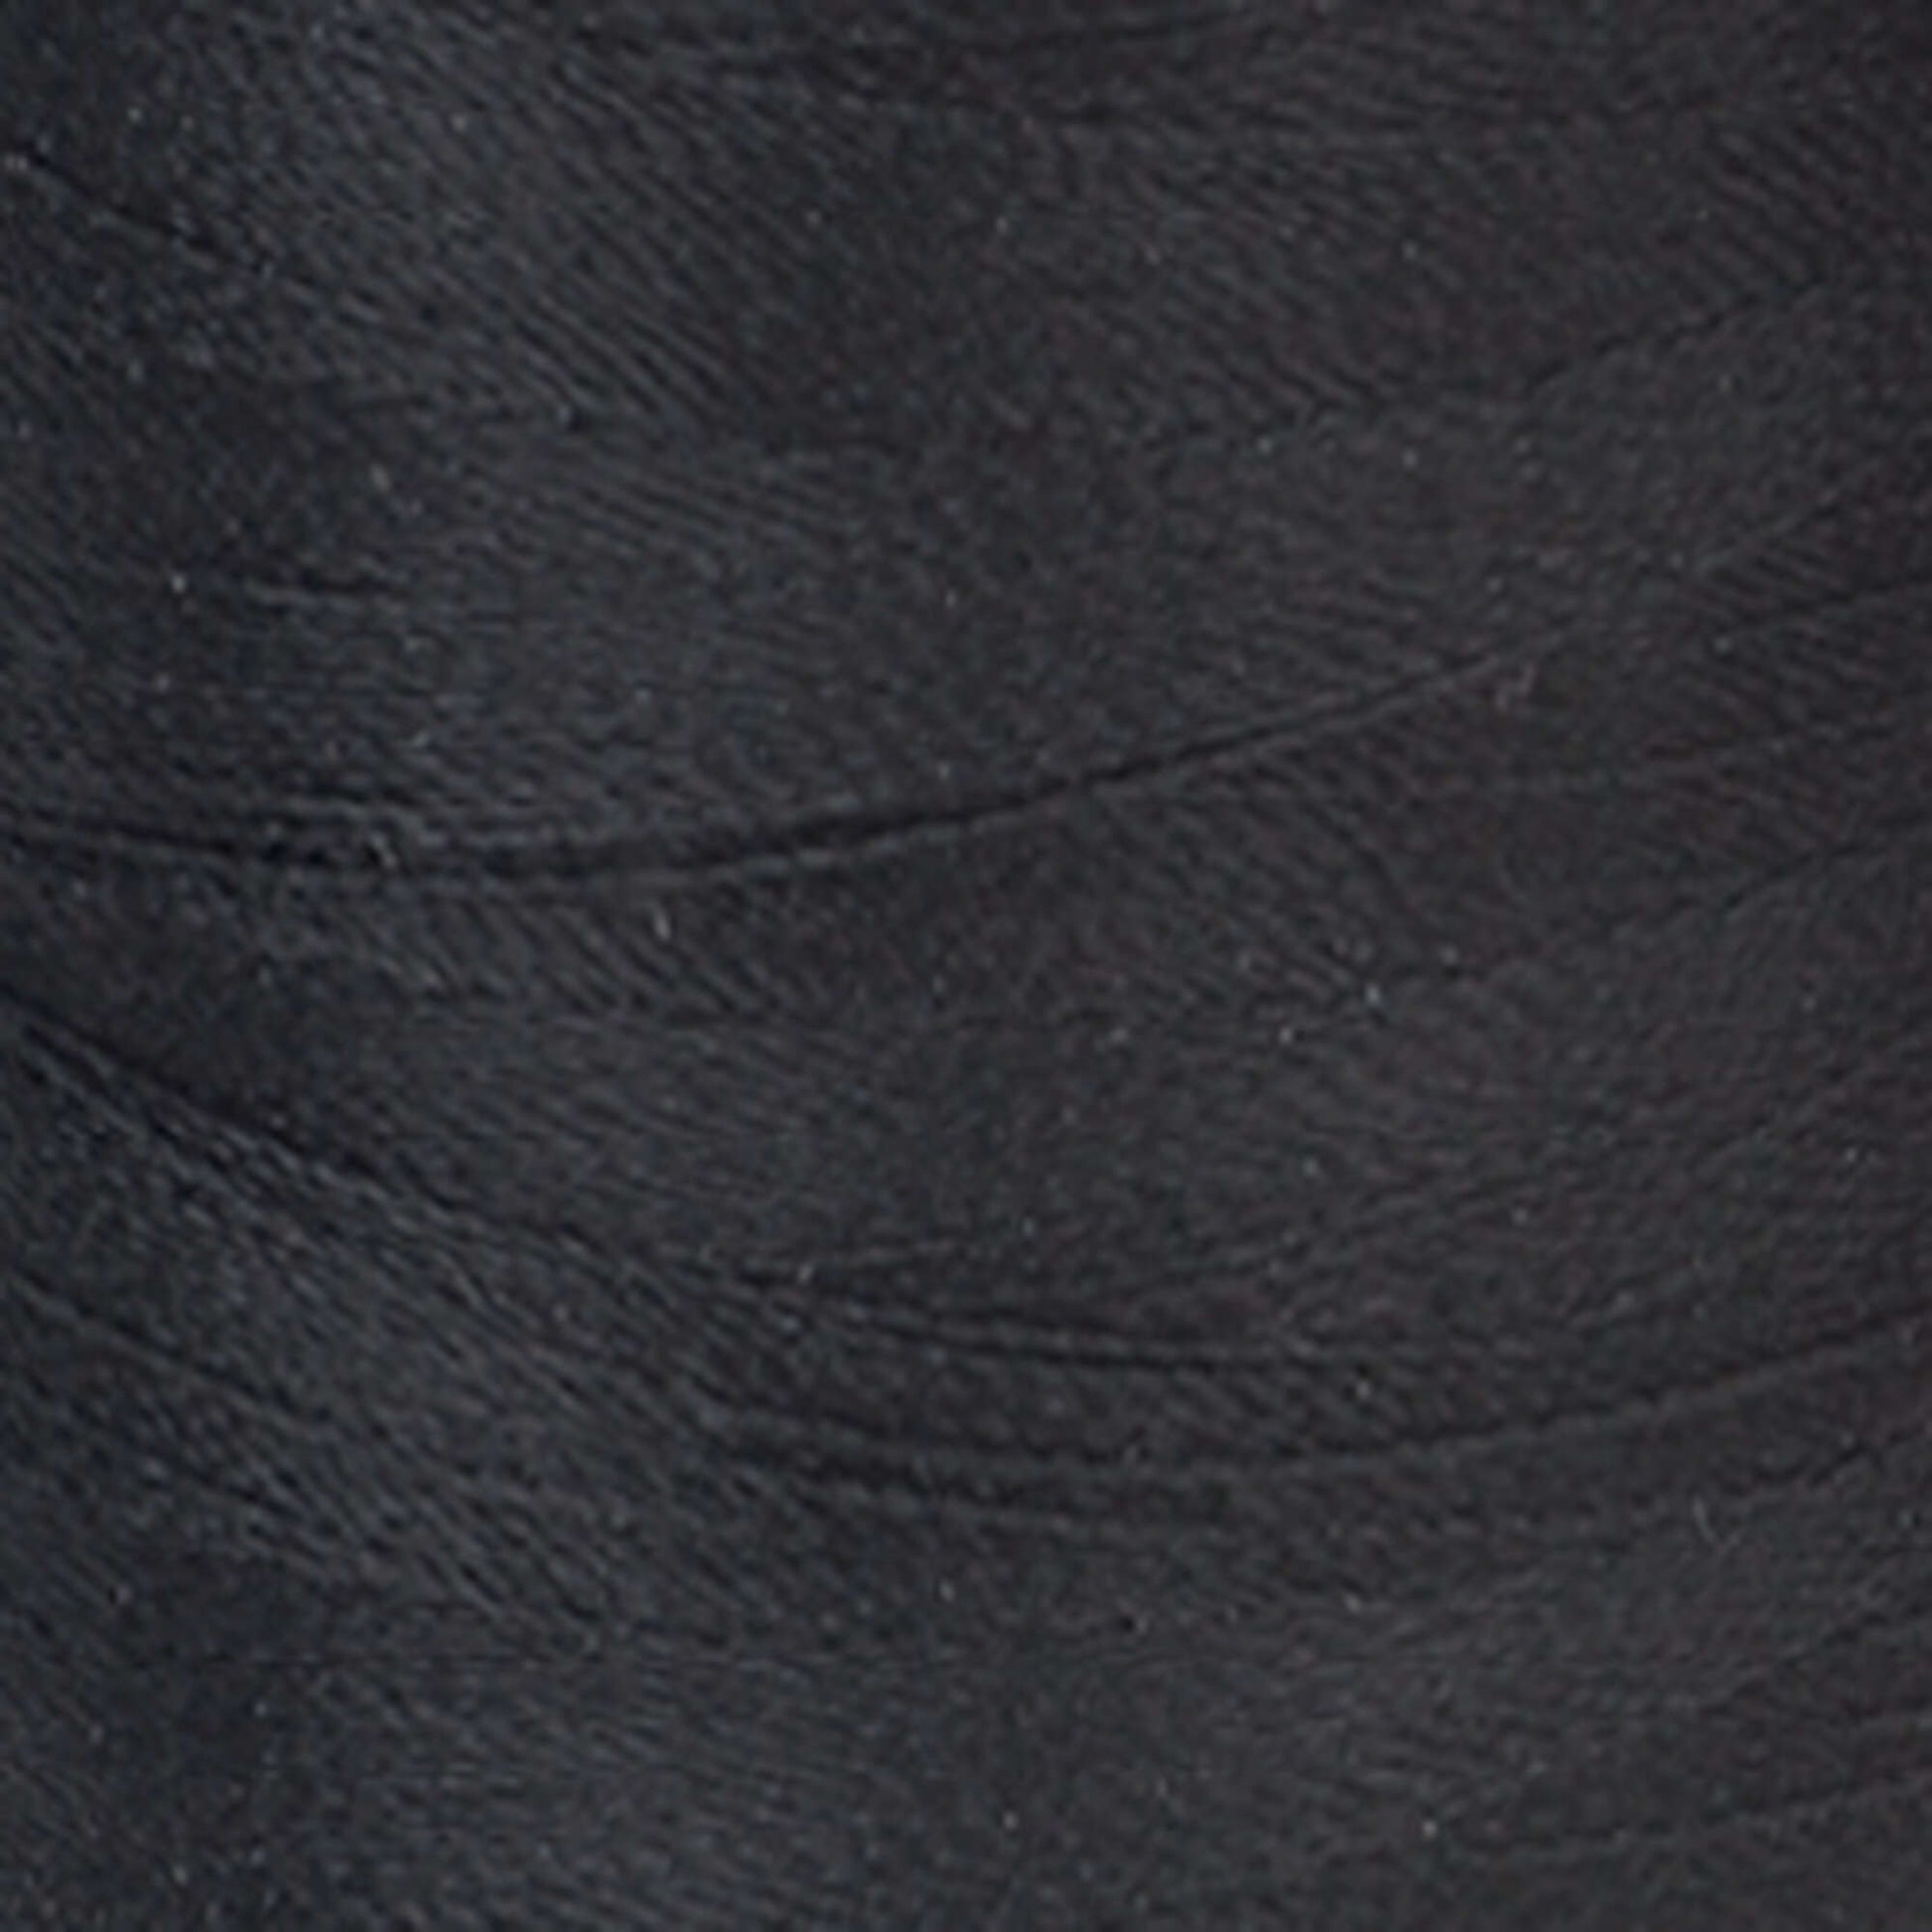 Coats & Clark Machine Embroidery Thread (1100 Yards) Black